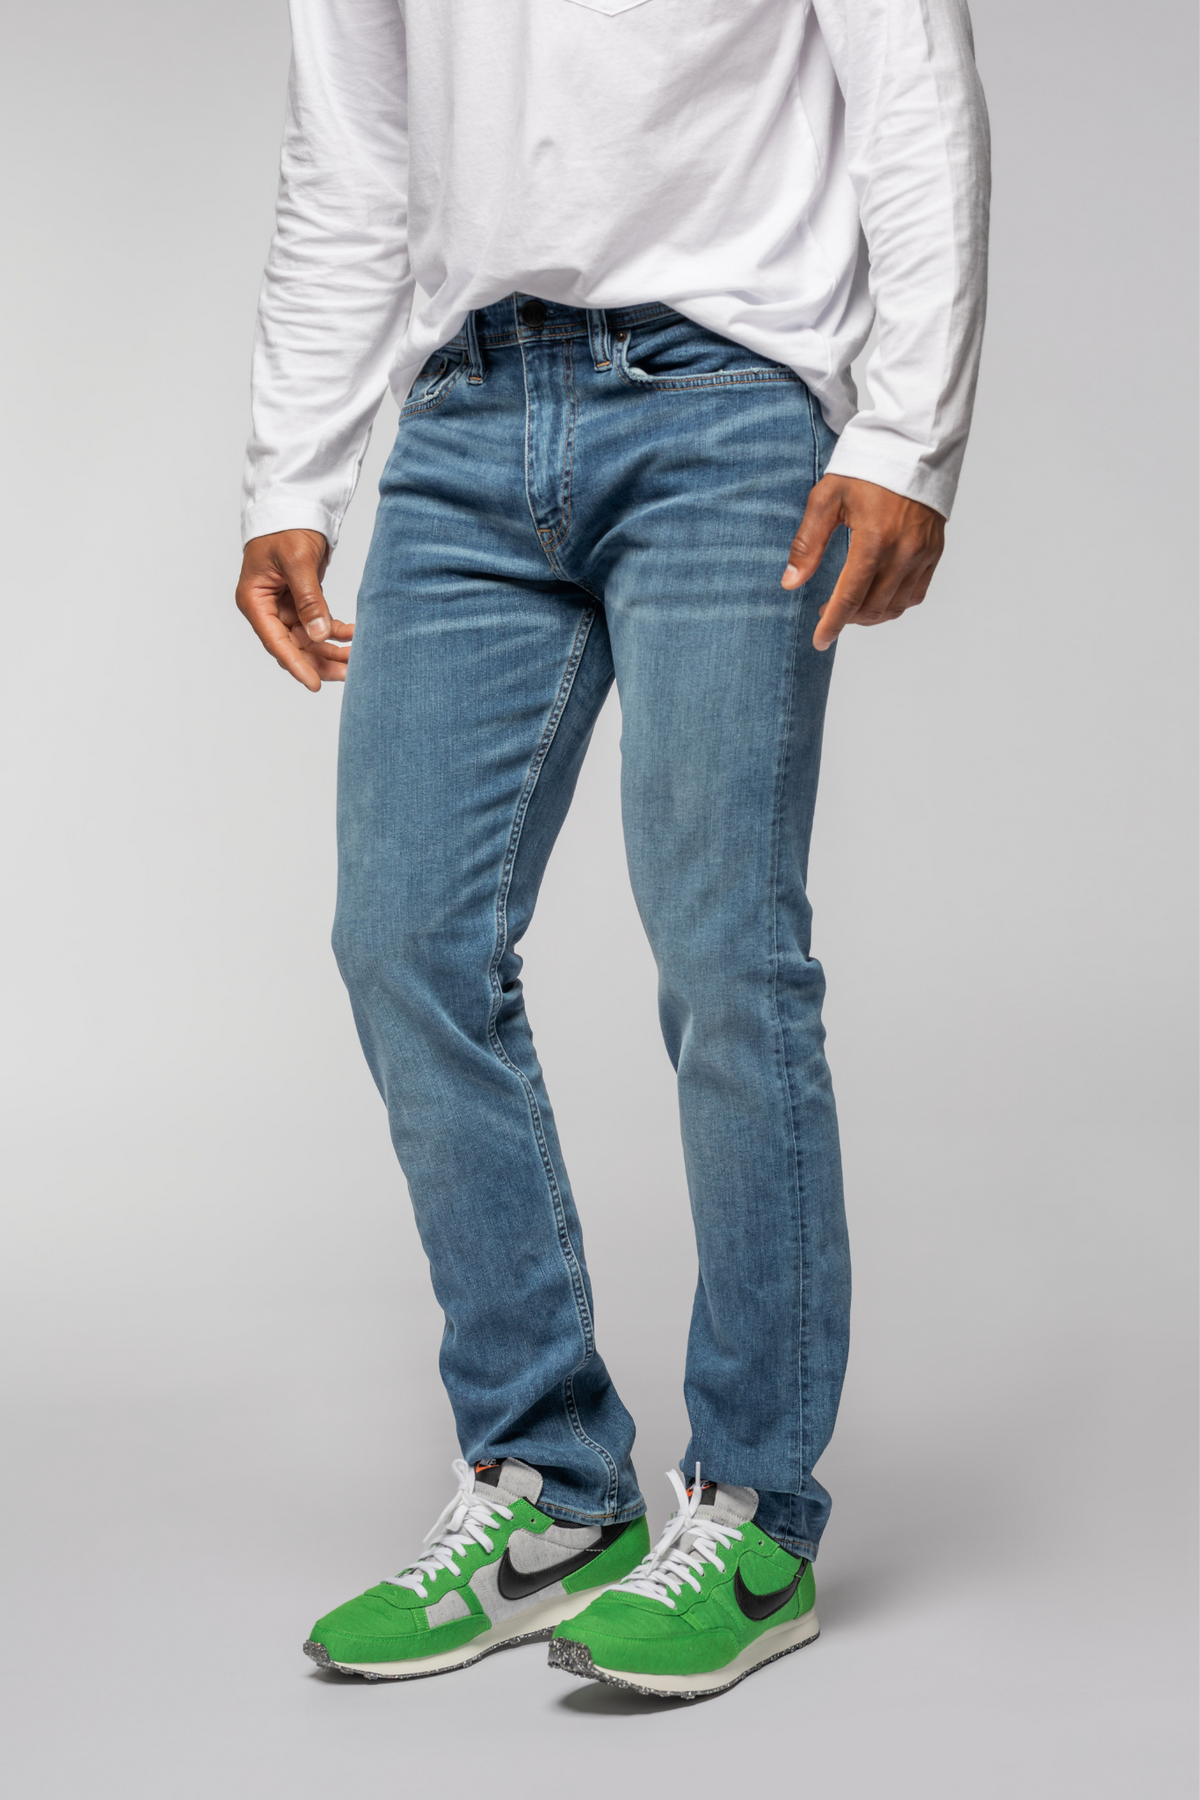 Sharp Men's Slim Fit Jeans - Faded Indigo Wash